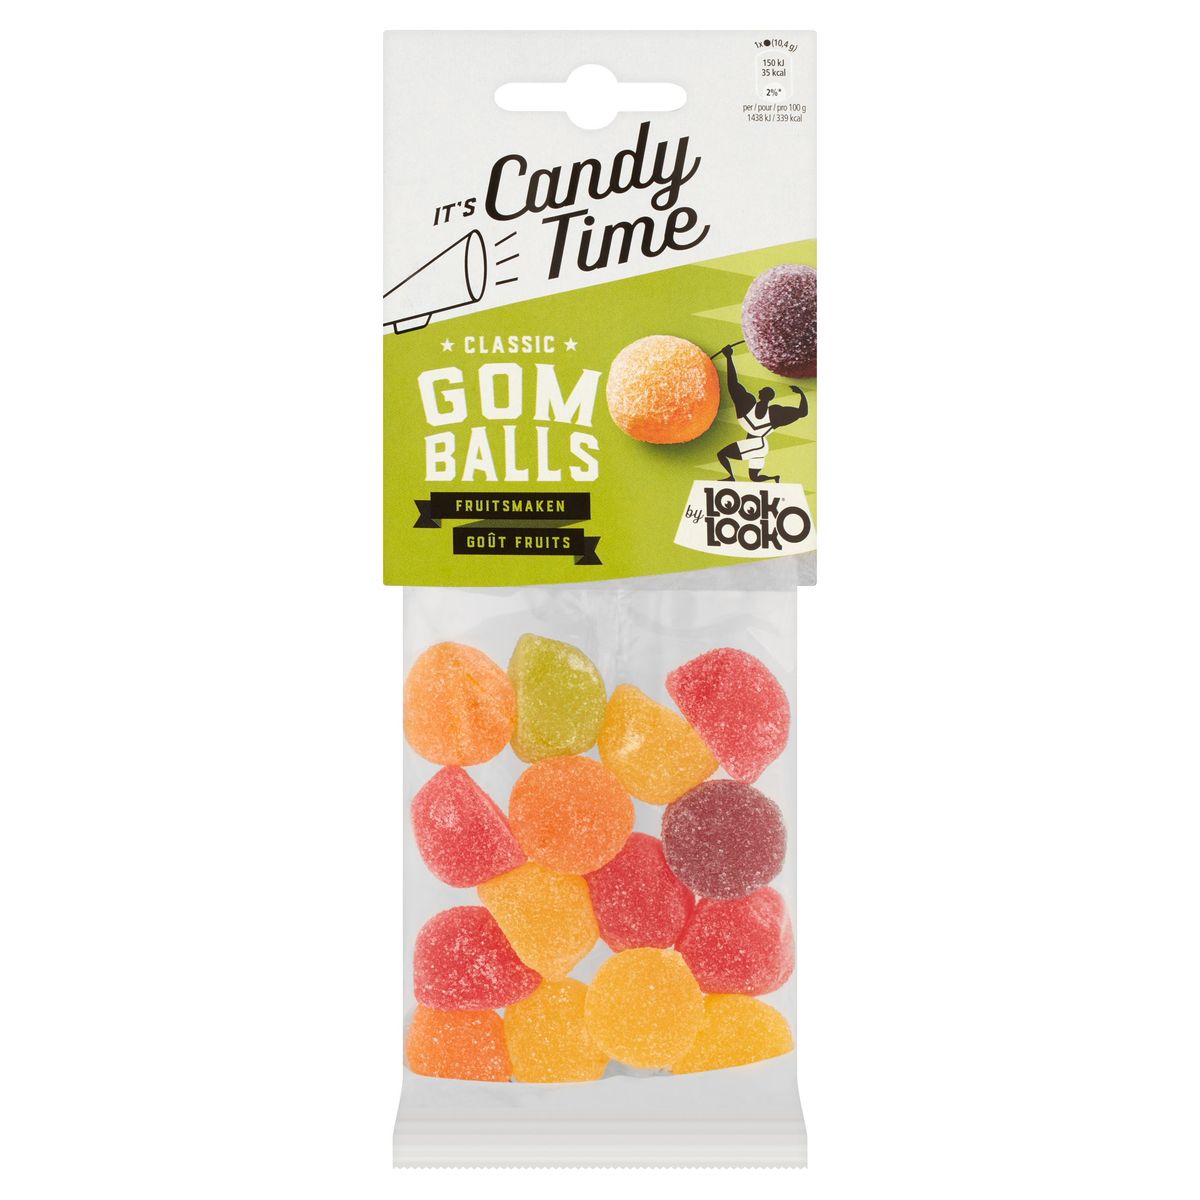 Candy Time Classic Gom Balls Goût Fruits 160 g